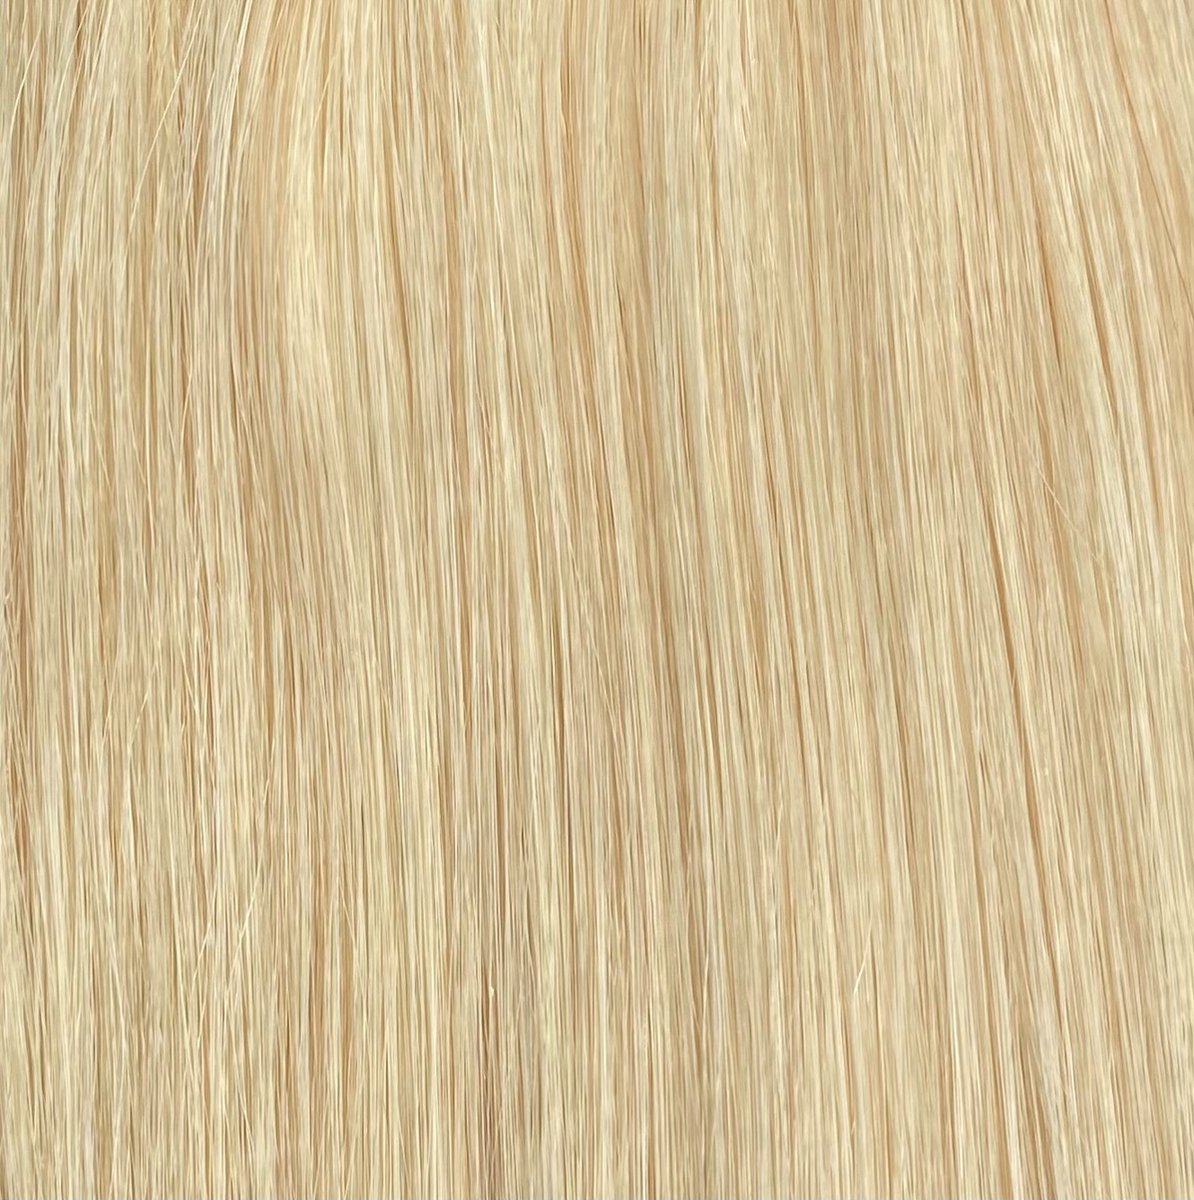 LUXEXTEND Weave Hair Extensions #22 | Human hair Blond | Human Hair Weave | 60 cm - 100 gram | Remy Sorted & Double Drawn | Haarstuk | Extensions Haar | Extensions Human Hair | Echt Haar | Weave Hairextensions Bundels | Weft Haar | Haarverlenging